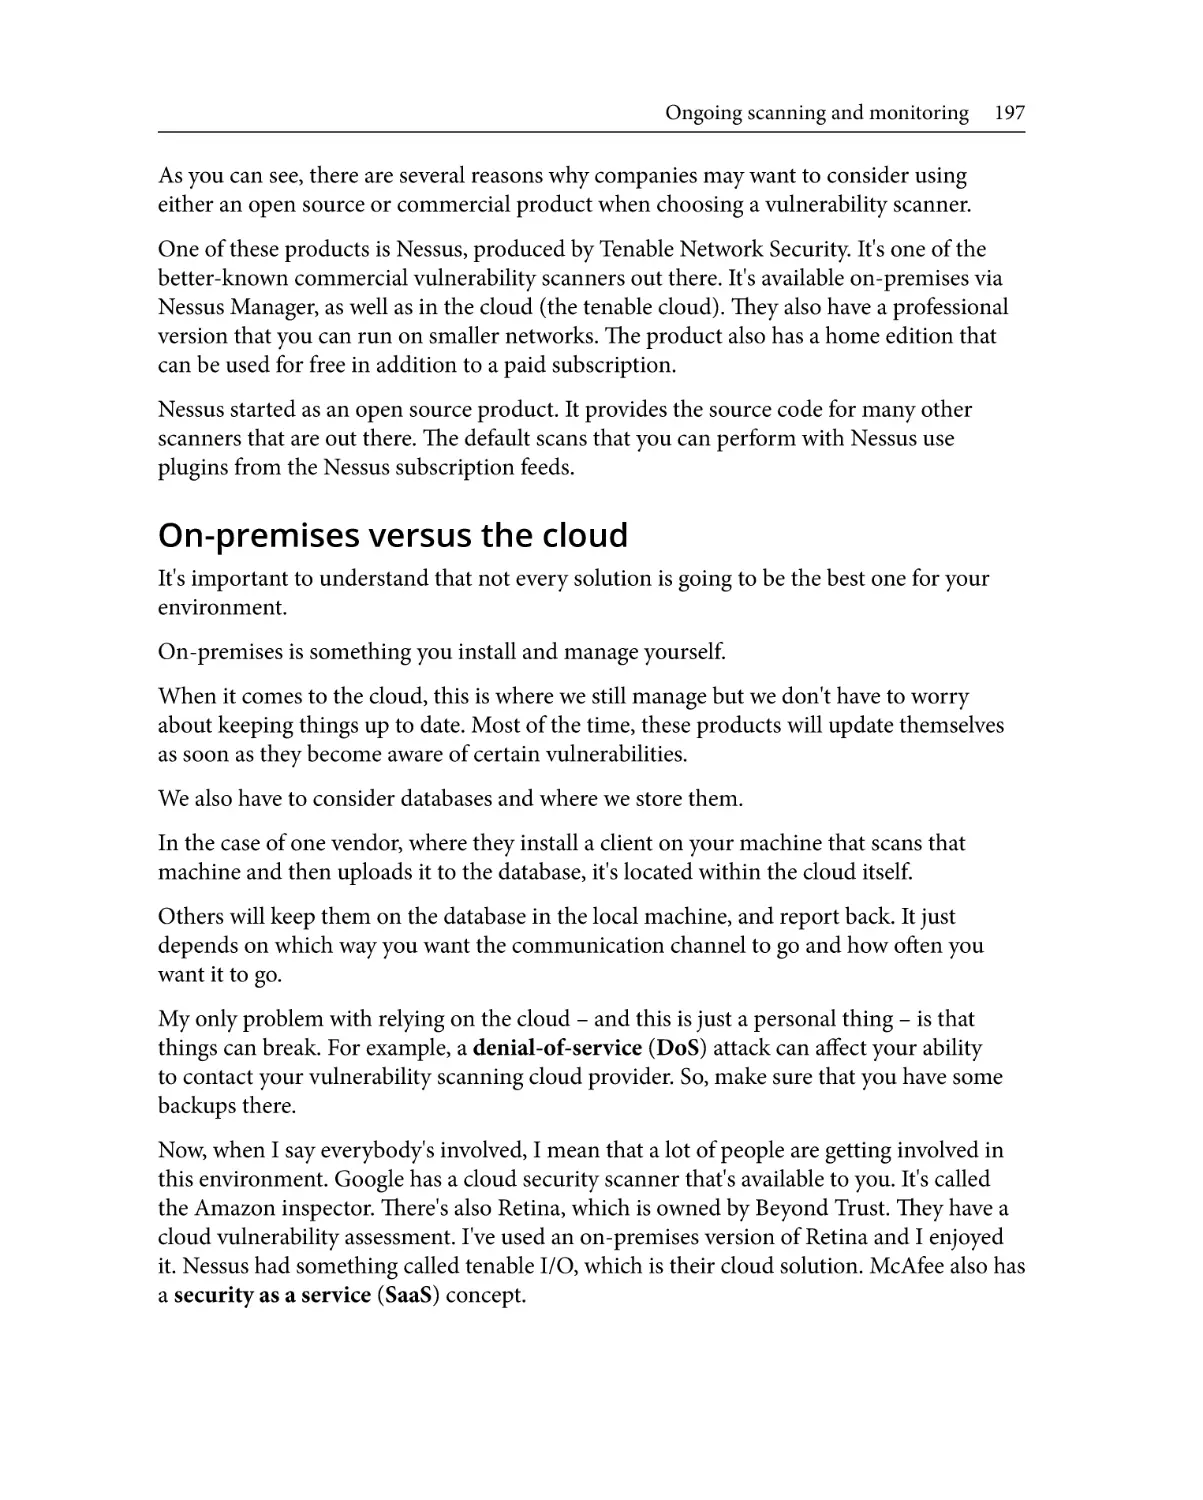 On-premises versus the cloud